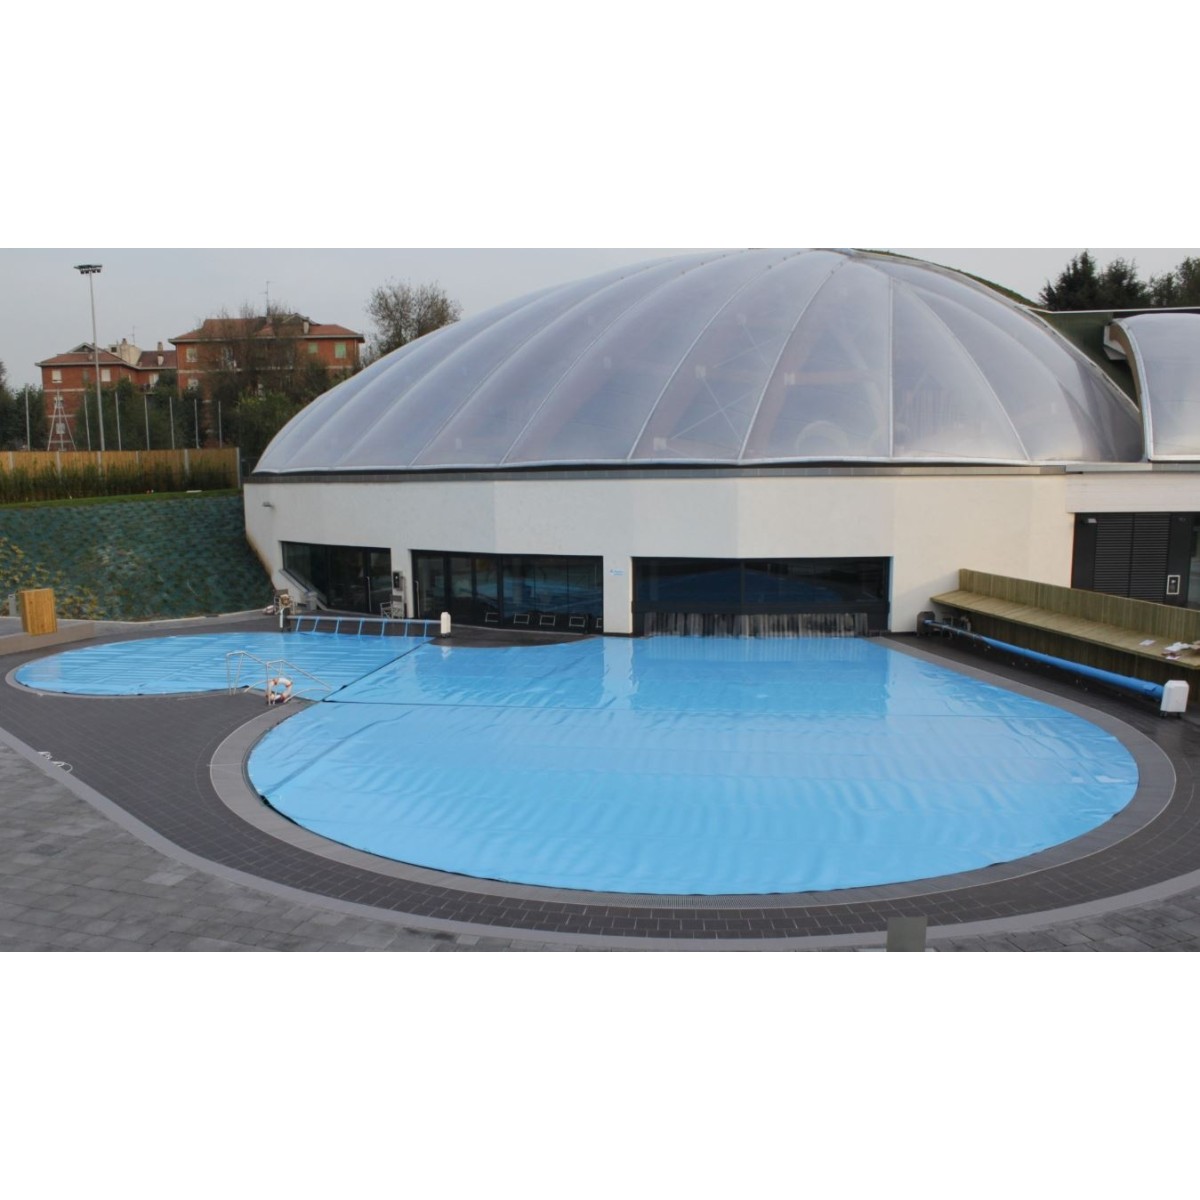 Copertura galleggiante Isoroll Light per piscina misura 4x8